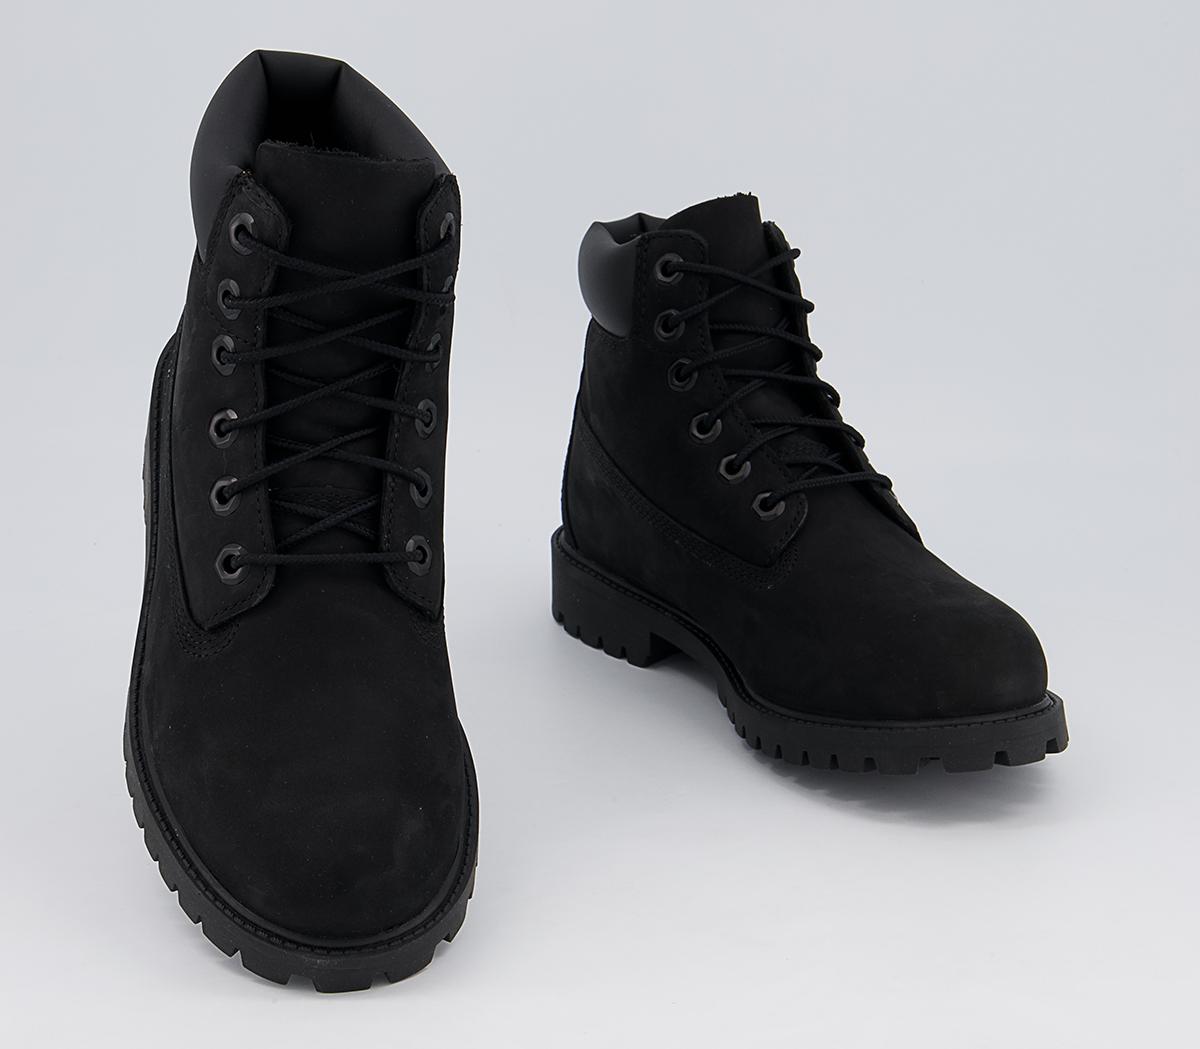 Timberland Juniors 6 Inch Premium Waterproof Boots Black Nubuck - Ankle ...